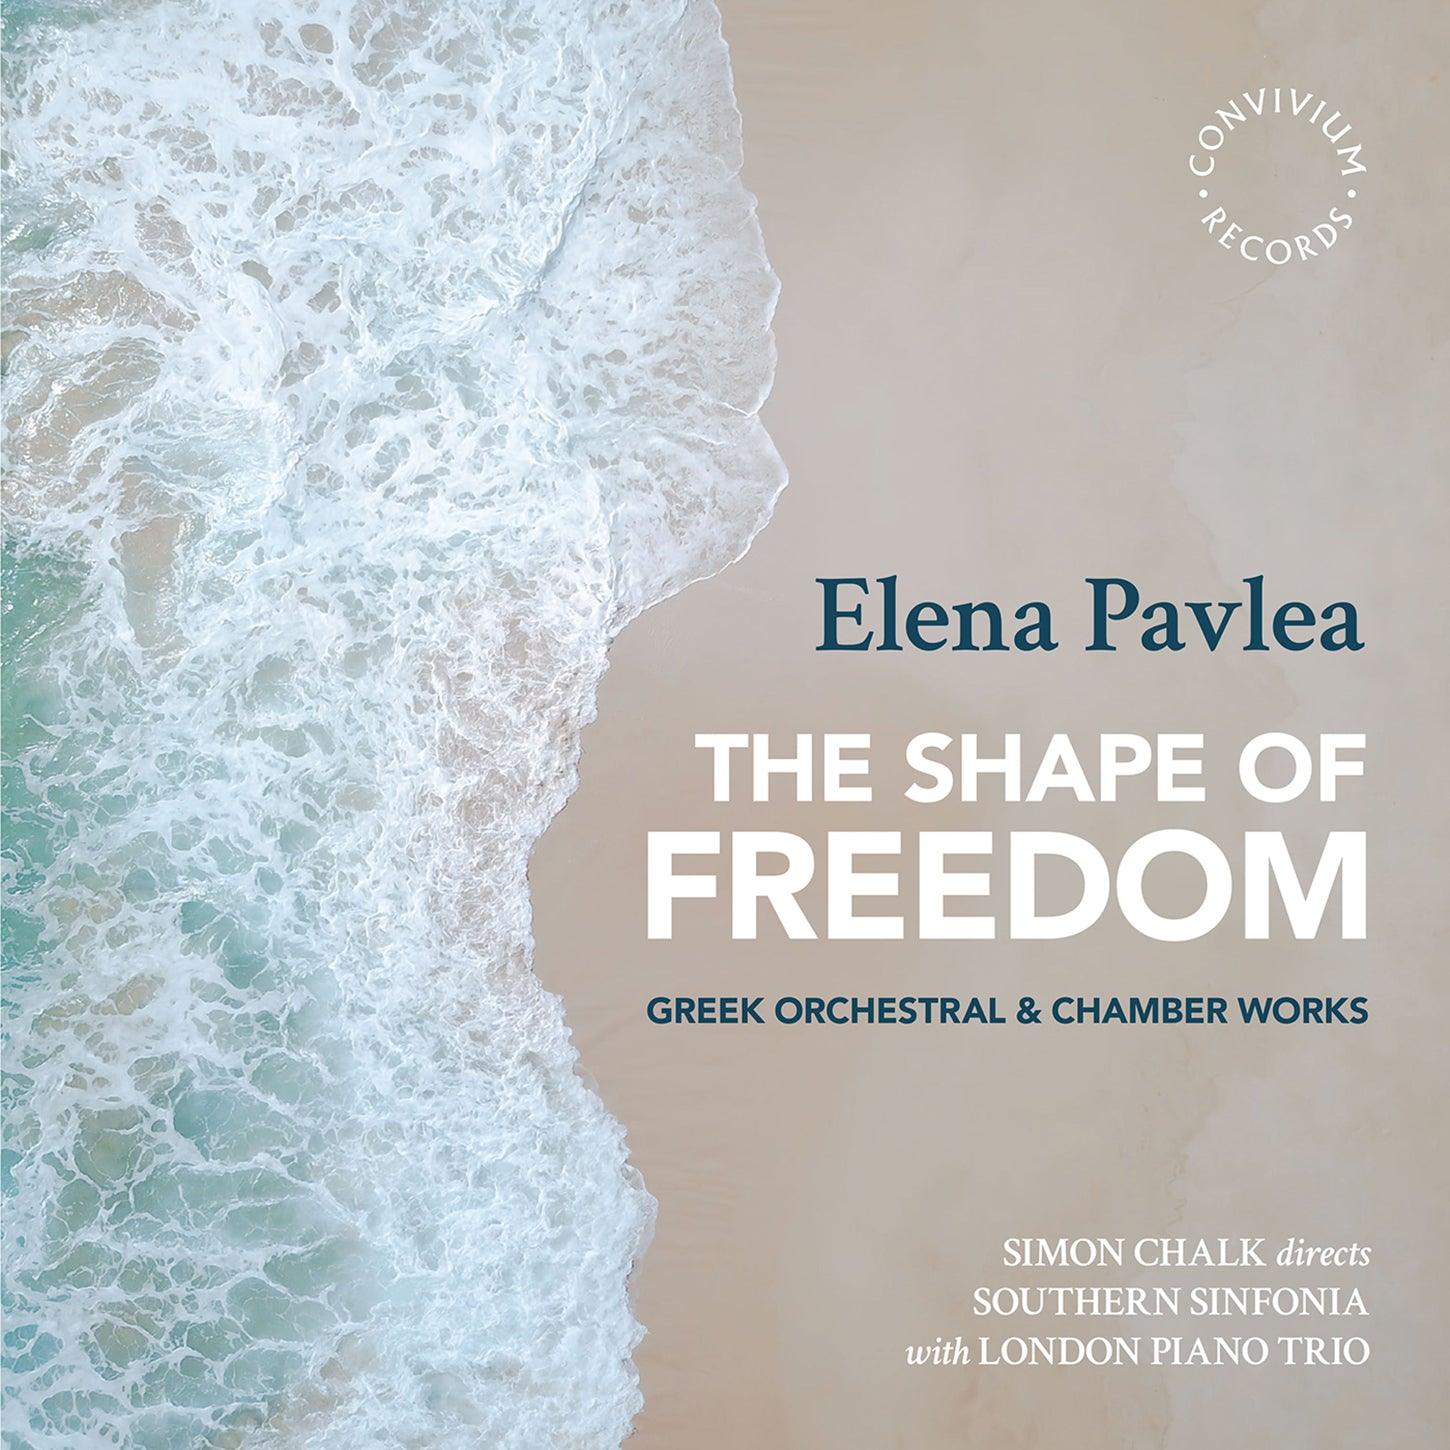 Pavlea: The Shape of Freedom / Chalk, Southern Sinfonia, London Piano Trio - ArkivMusic